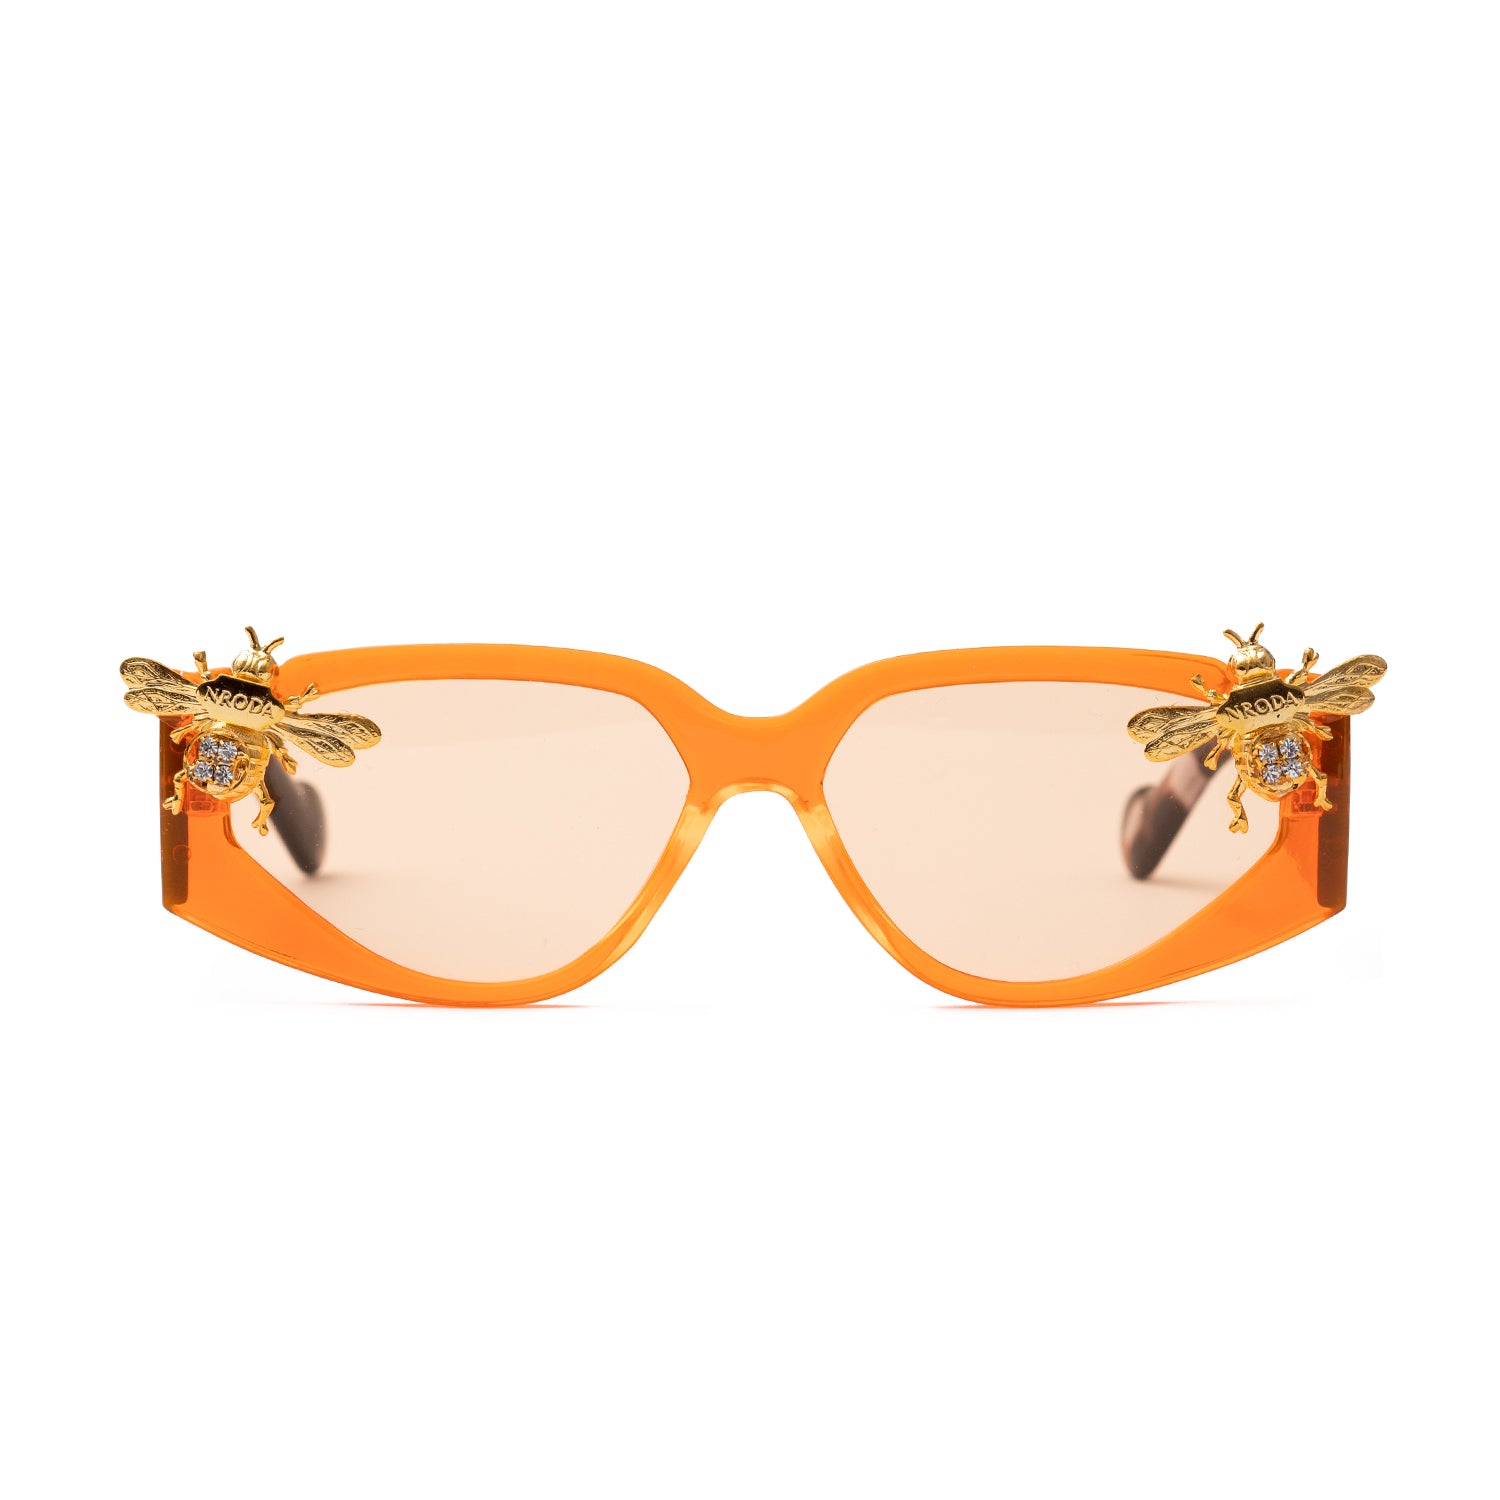 Nroda Riviera Bee - Gemstone Edition Fire Orange Eyewear Sunglasses Collection, Tnemnroda man- NRODA